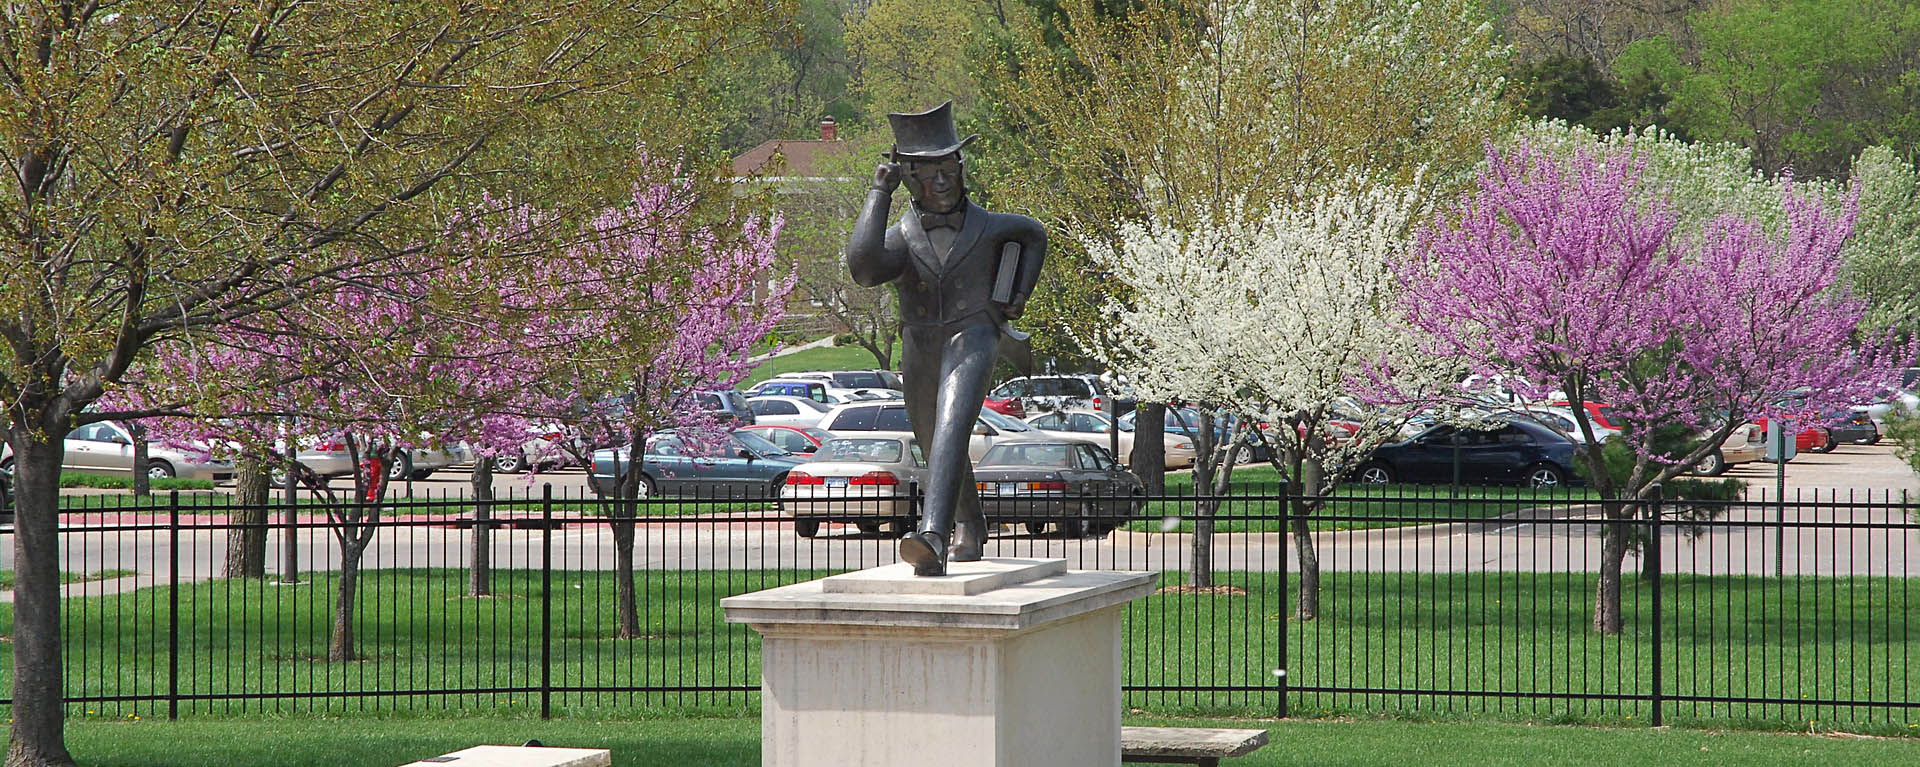 Ichabod statue on campus.